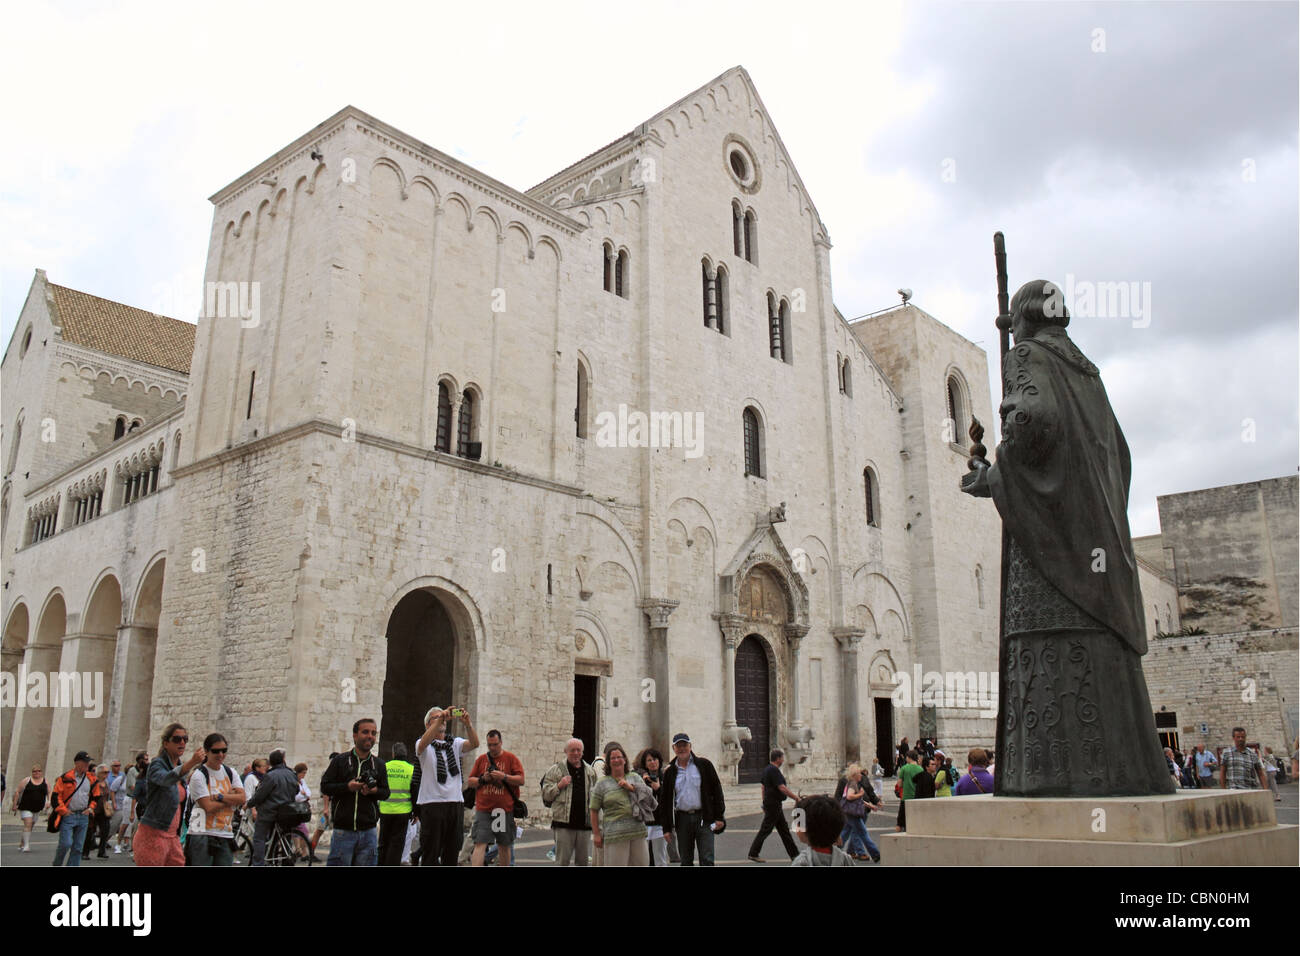 La iglesia de San Nicolás y la estatua, la Basílica di San Nicola, Piazza San Nicola, Bari Vecchia, Apulia, Puglia, Mar Adriático, Europa Foto de stock